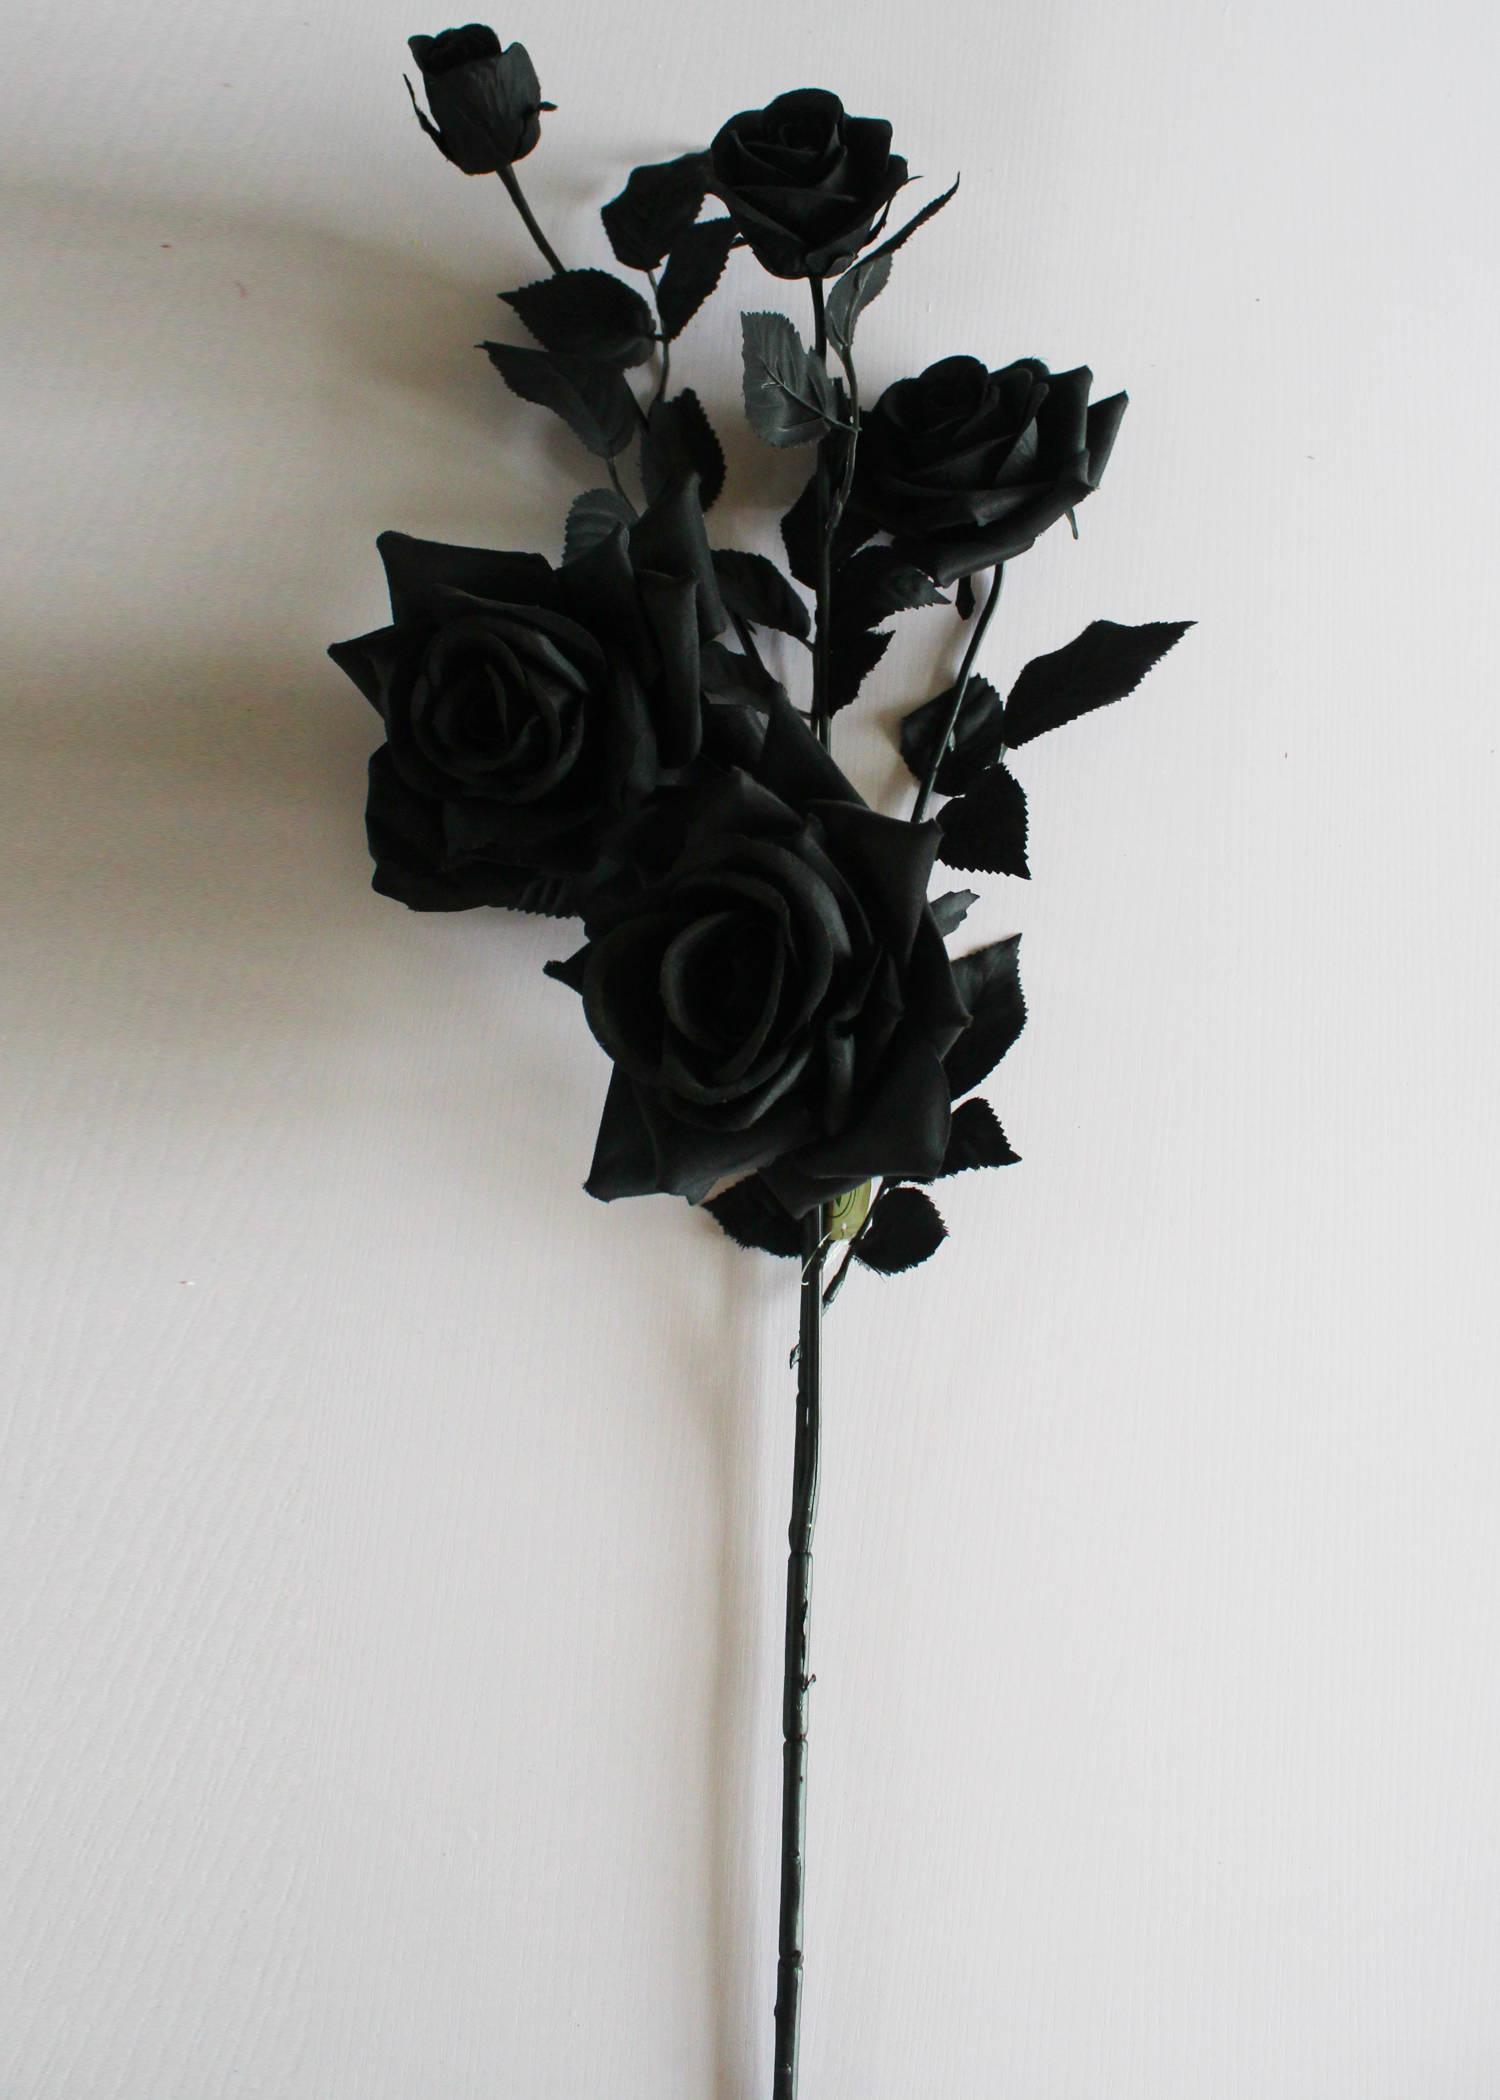 Caption: Mystic Beauty: Black Rose Iphone Wallpaper